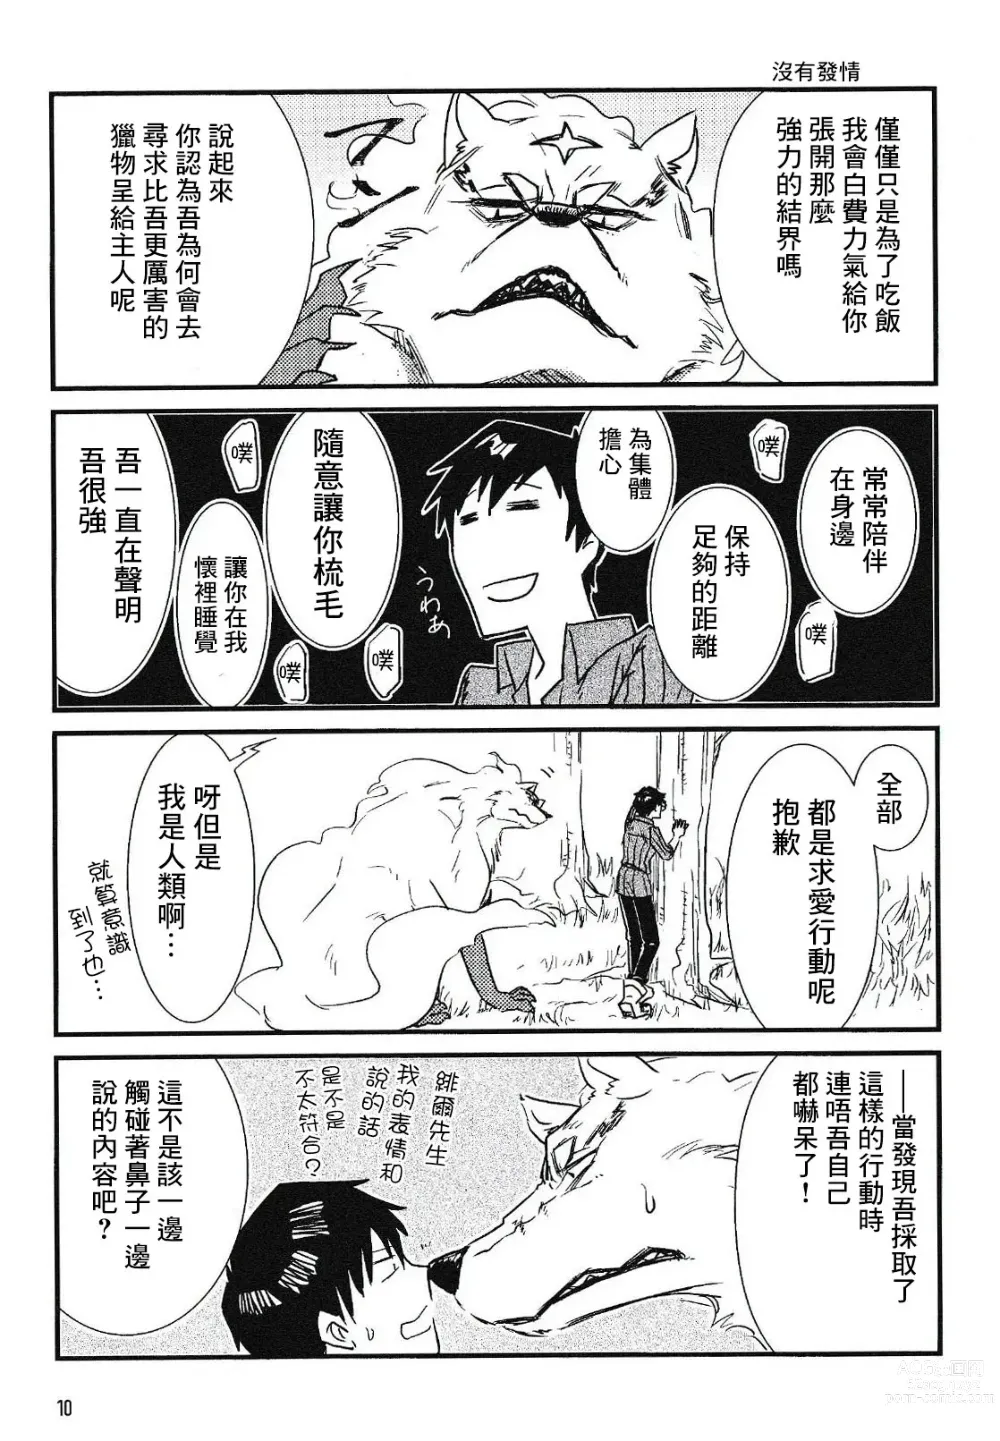 Page 10 of doujinshi NO WONDER!